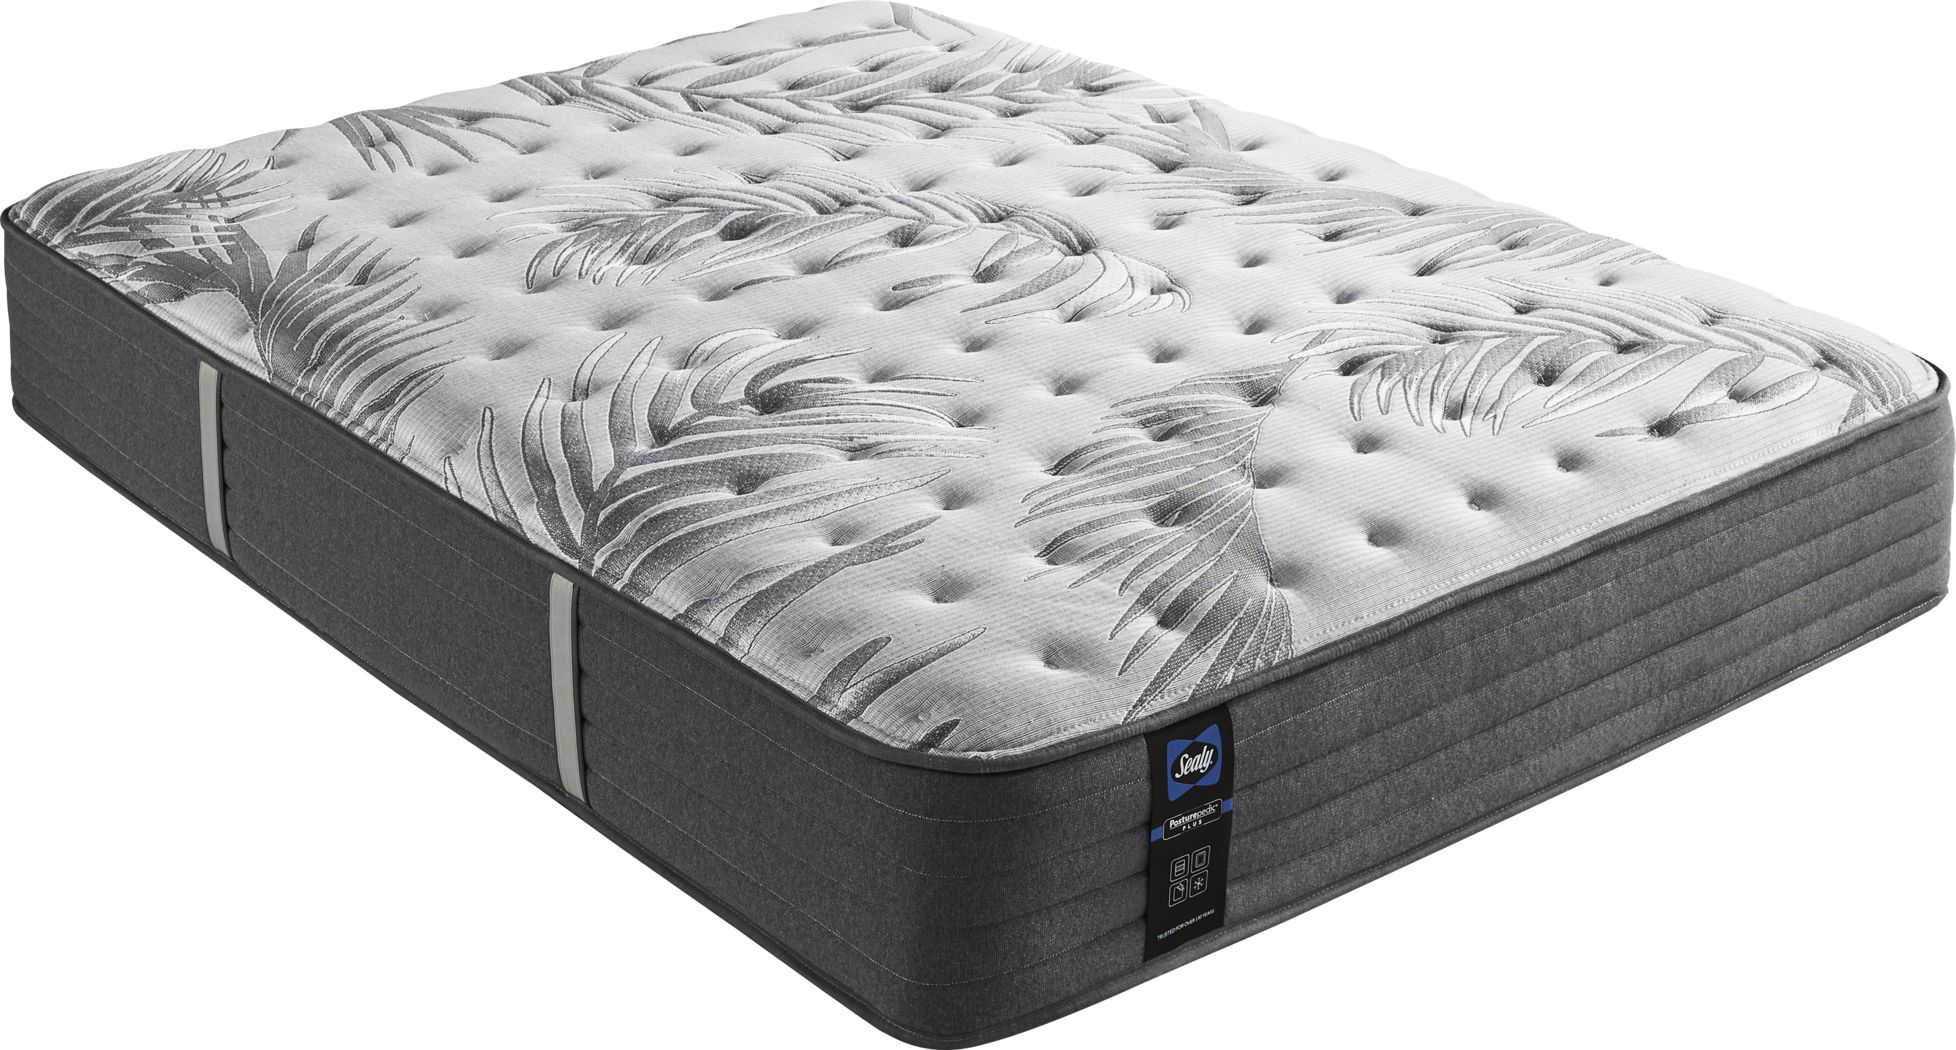 sealy queen size mattress sale